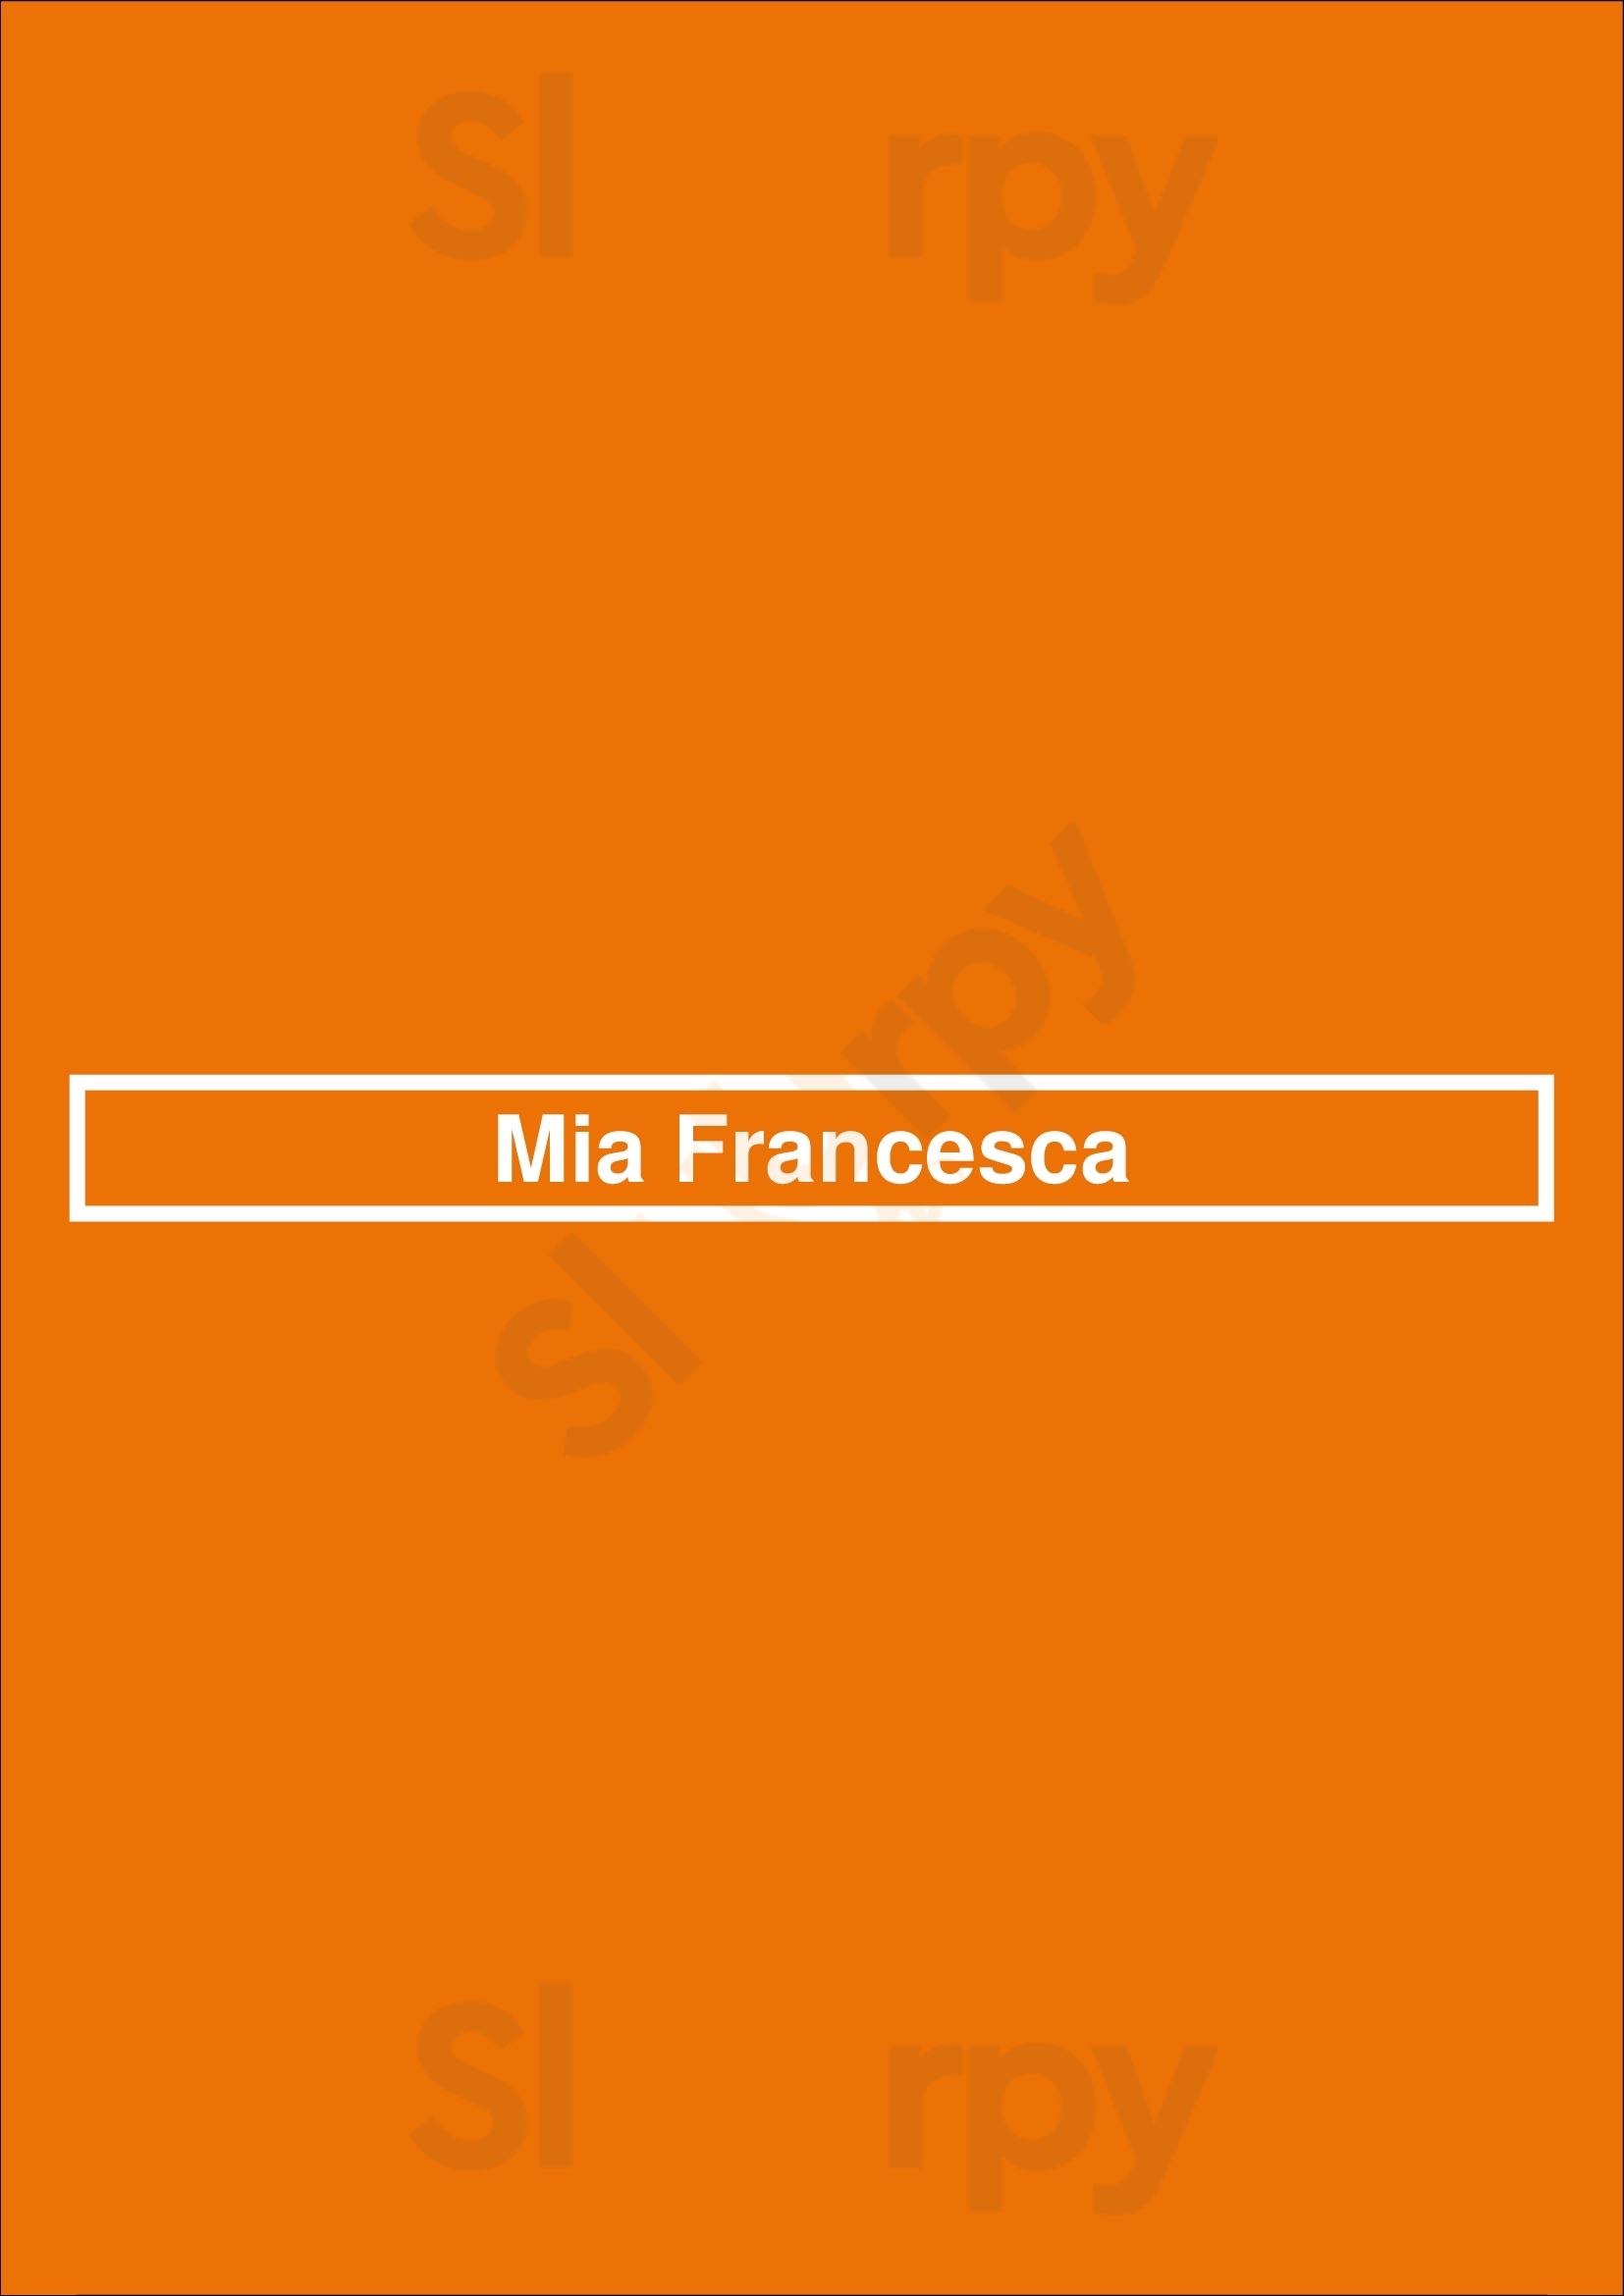 Mia Francesca Chicago Menu - 1